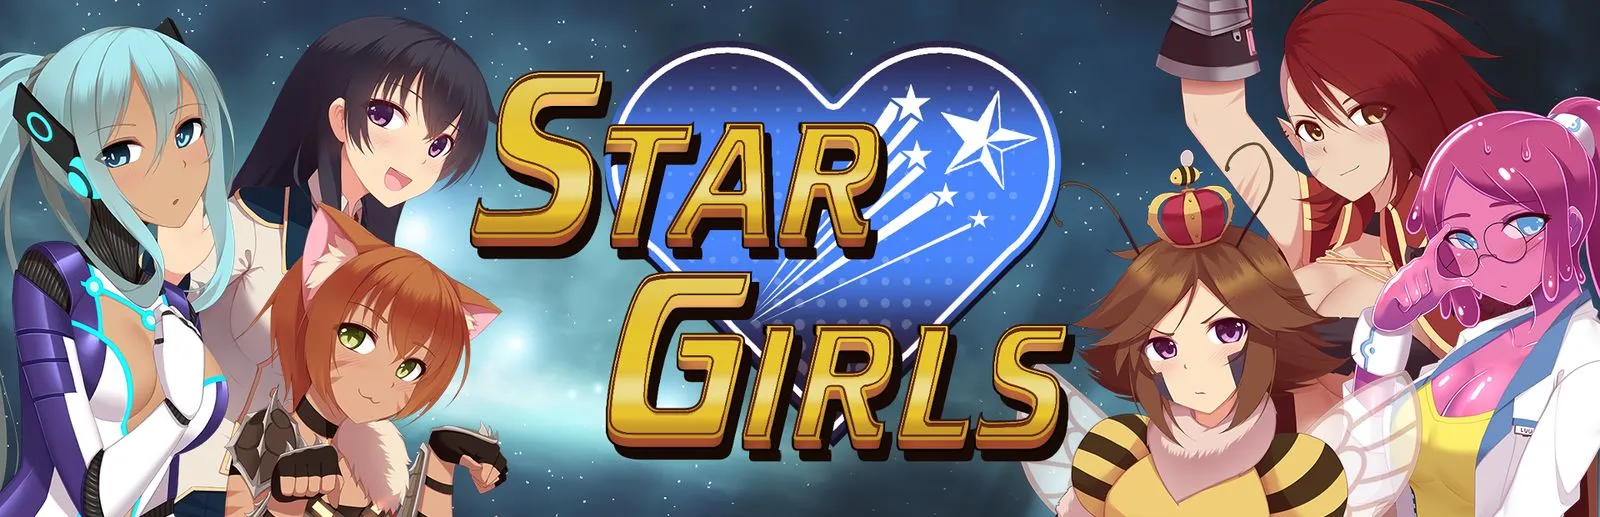 Star Girls [v1.1] main image